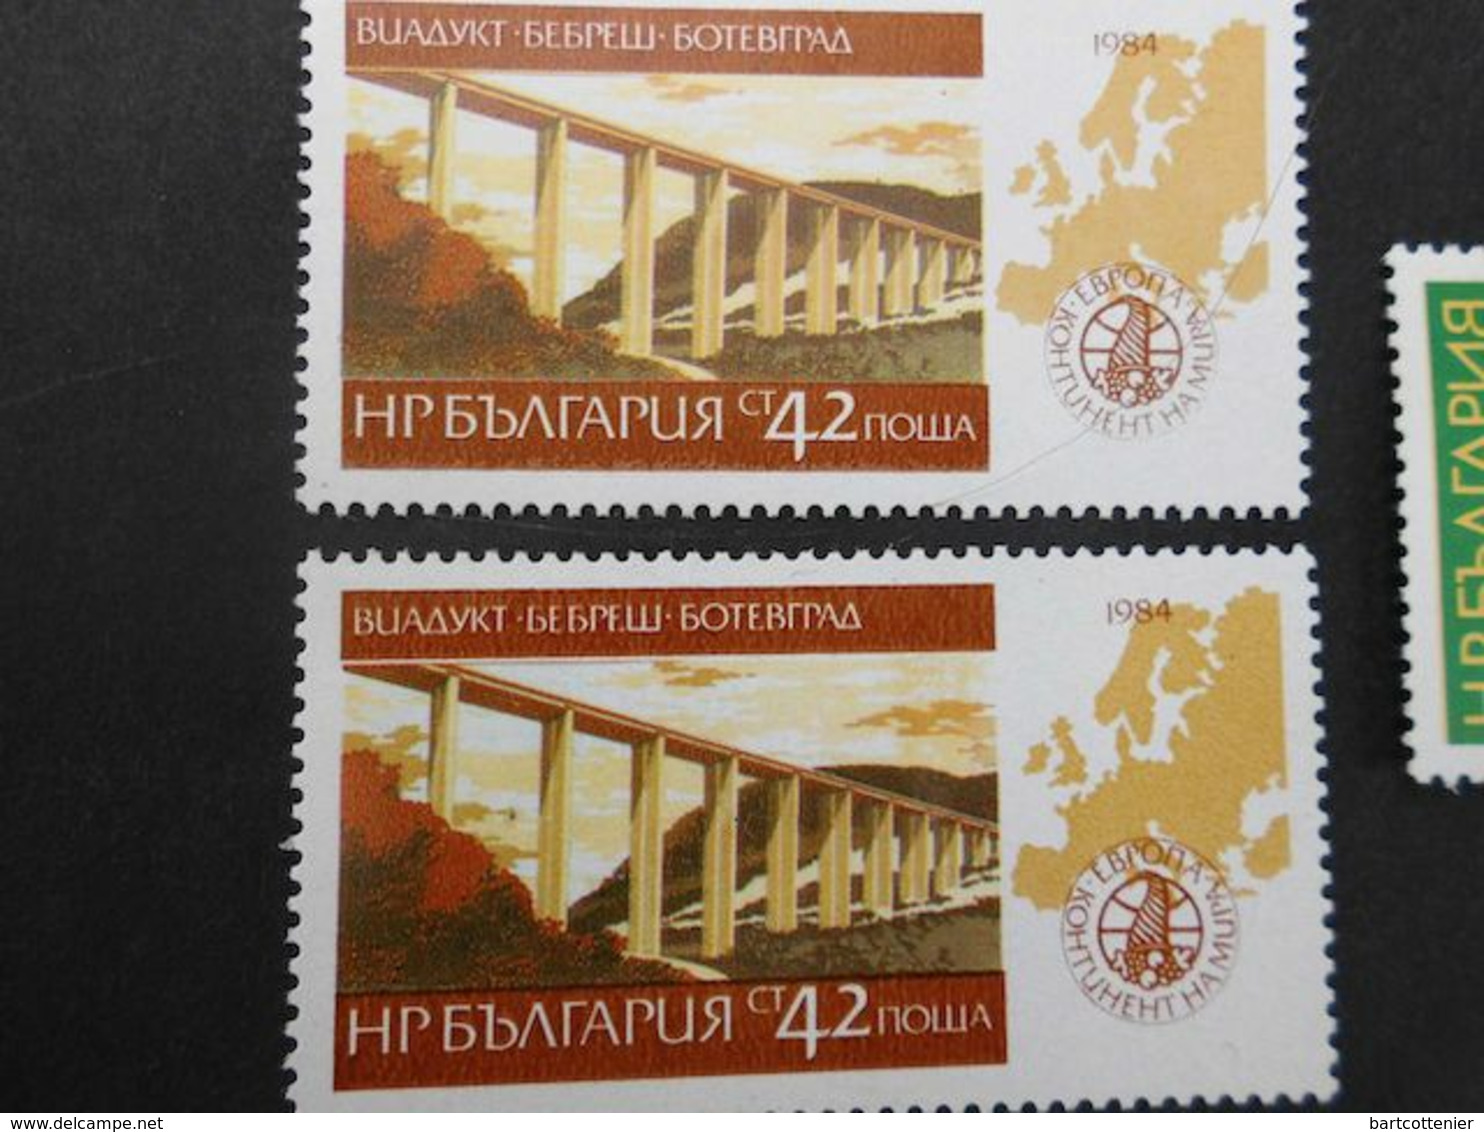 Bulgaria : 29 stamps (1911-2001)